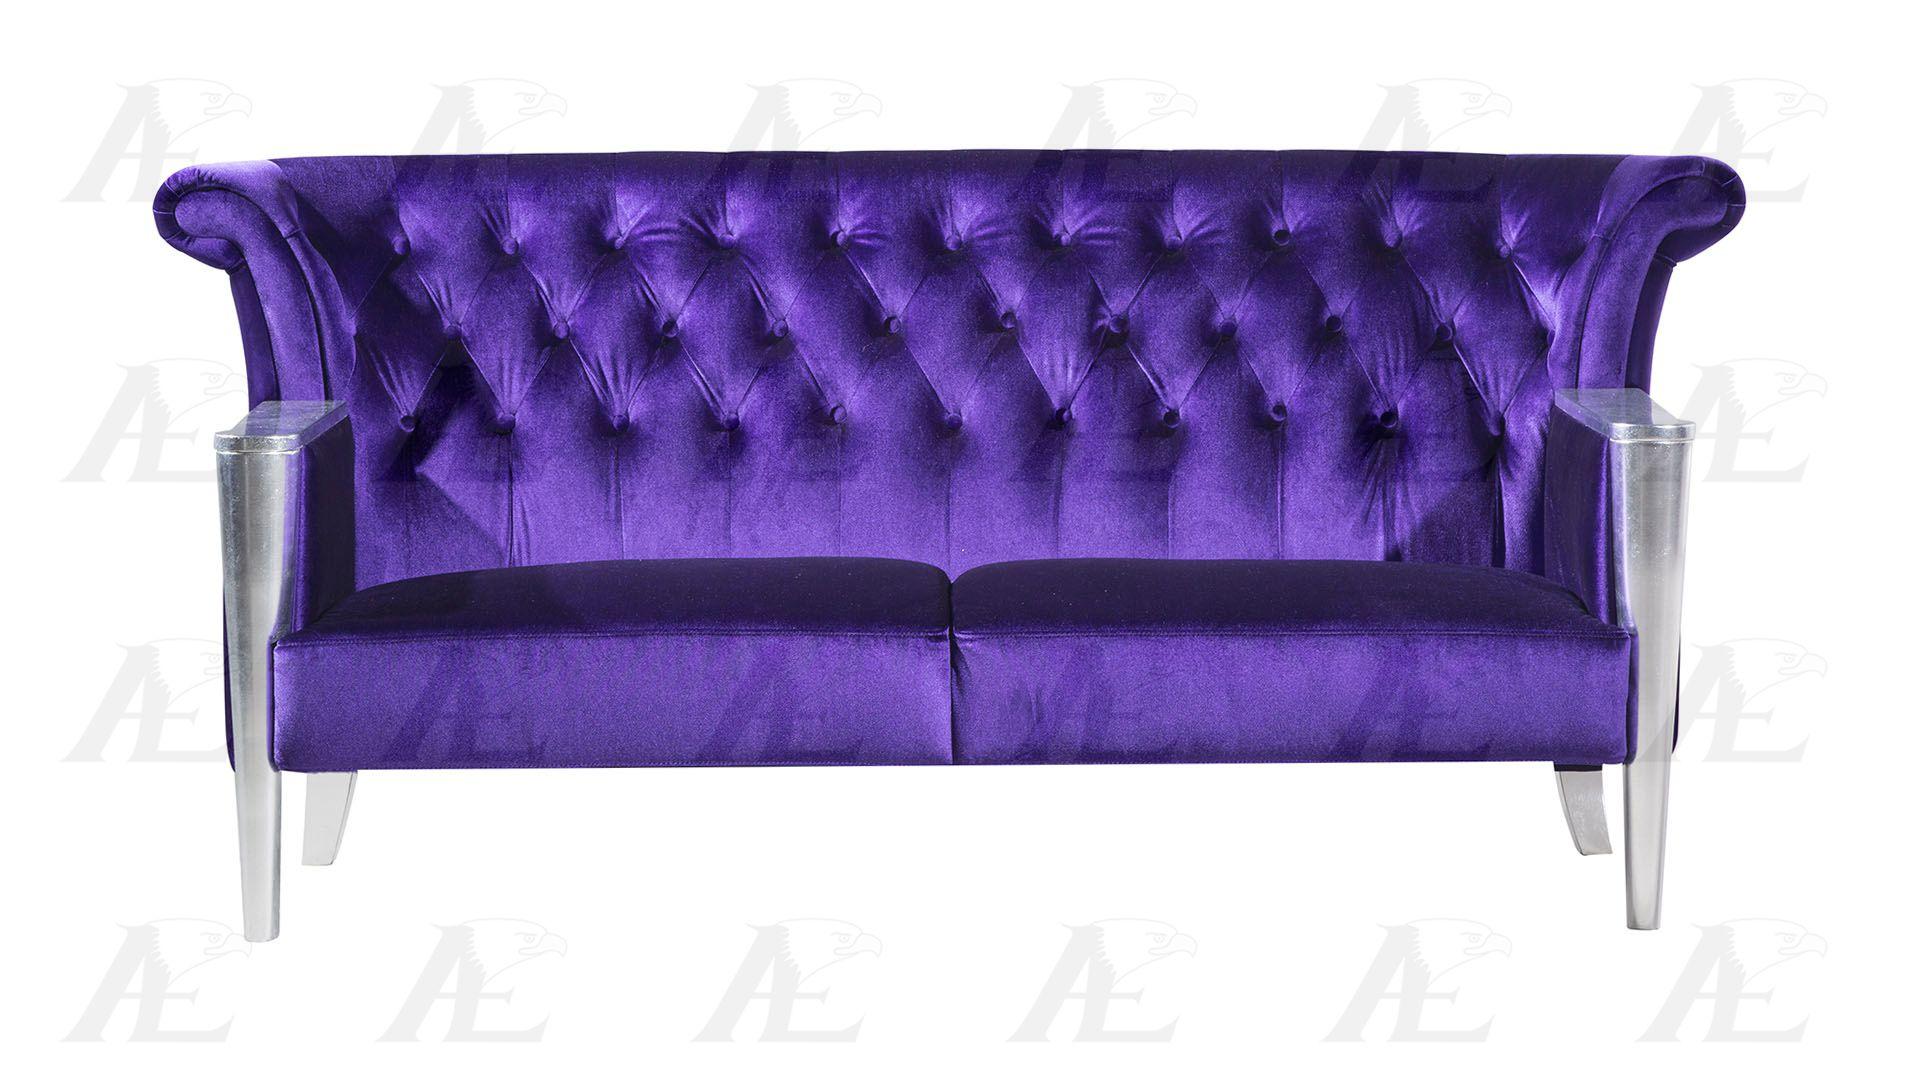 

    
American Eagle Furniture AE592 Sofa and Loveseat Set Purple AE592 Set-2
